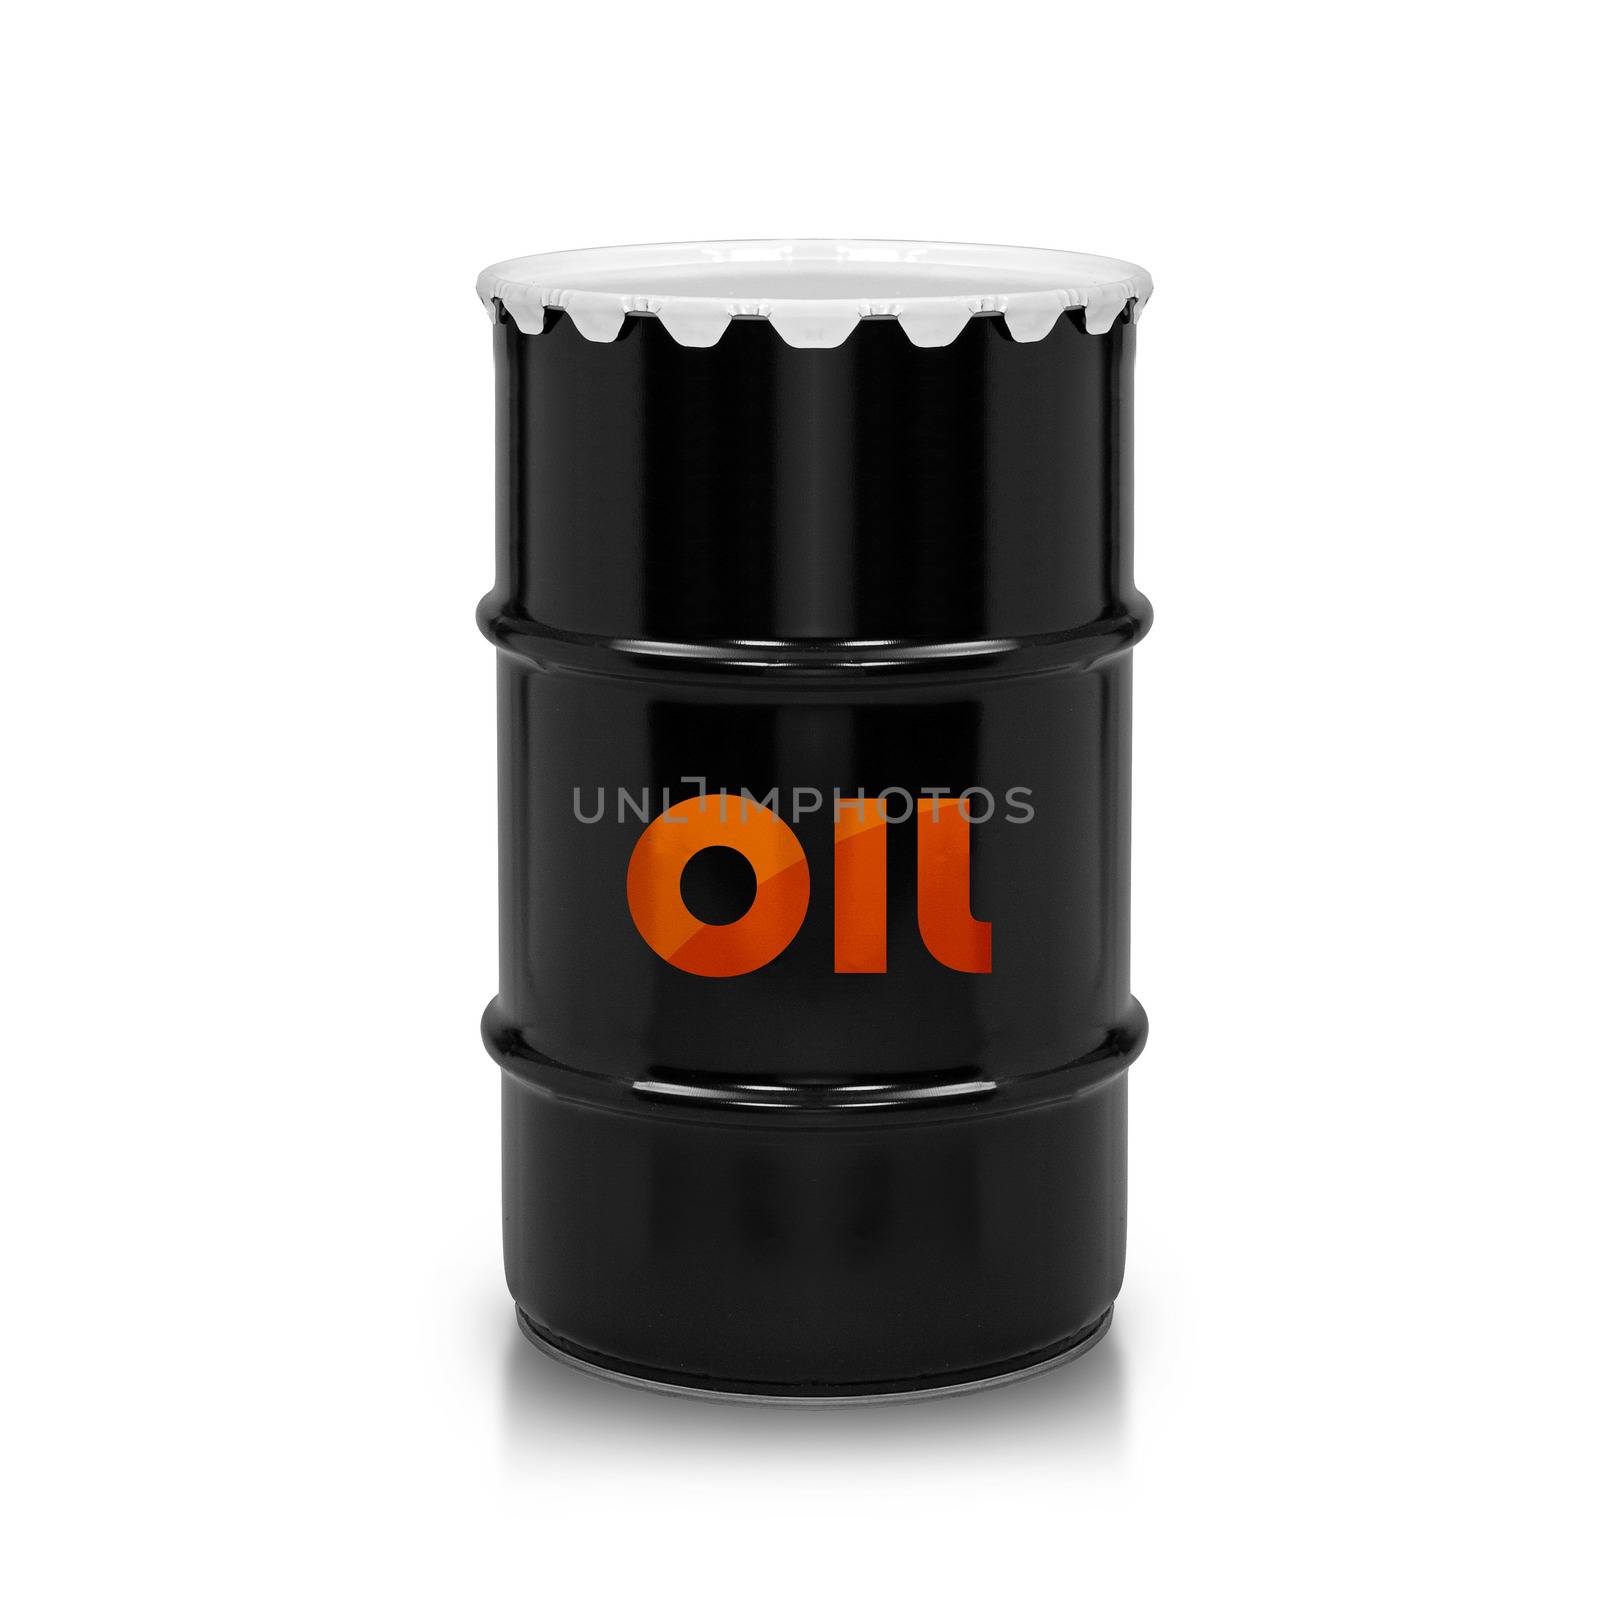 Petroleum Barrel by designsstock